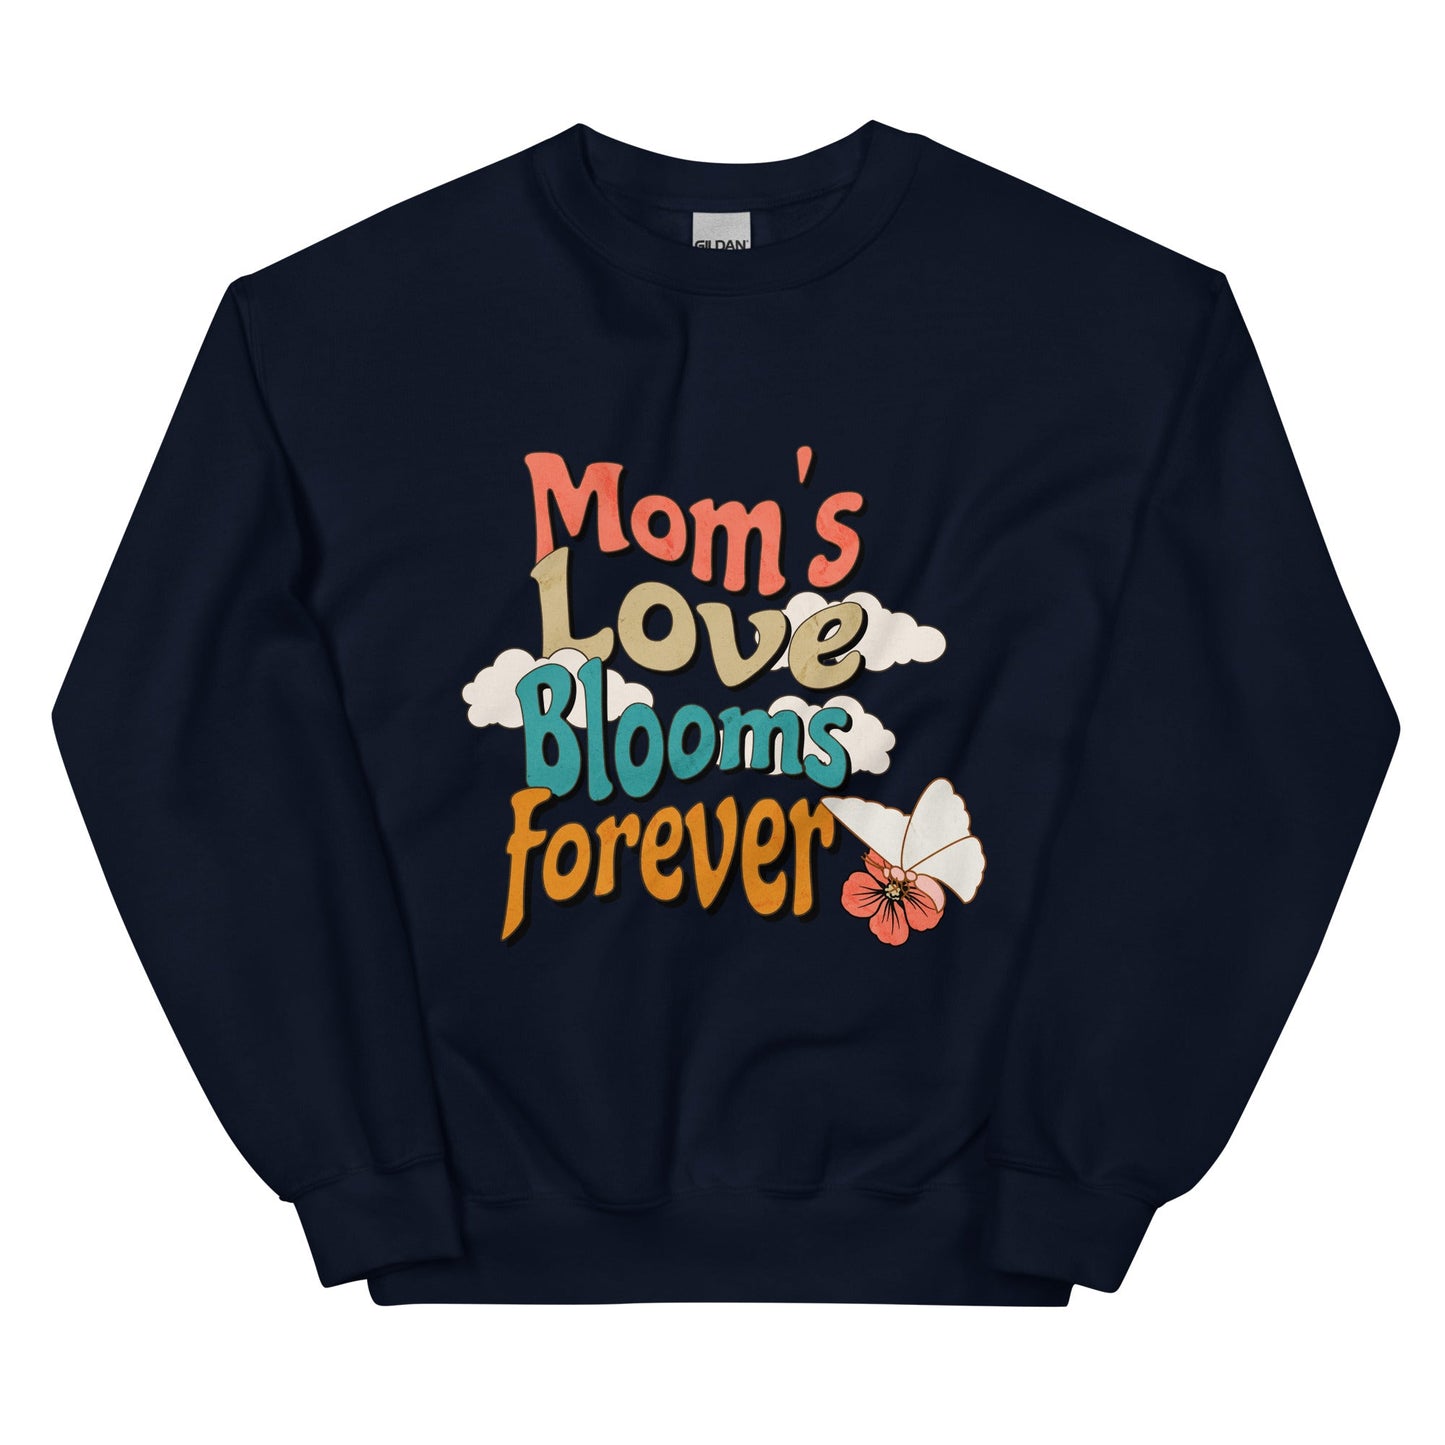 Mom's Love Blooms Forever Crewneck Sweatshirt-crewneck-Navy-S-mysticalcherry